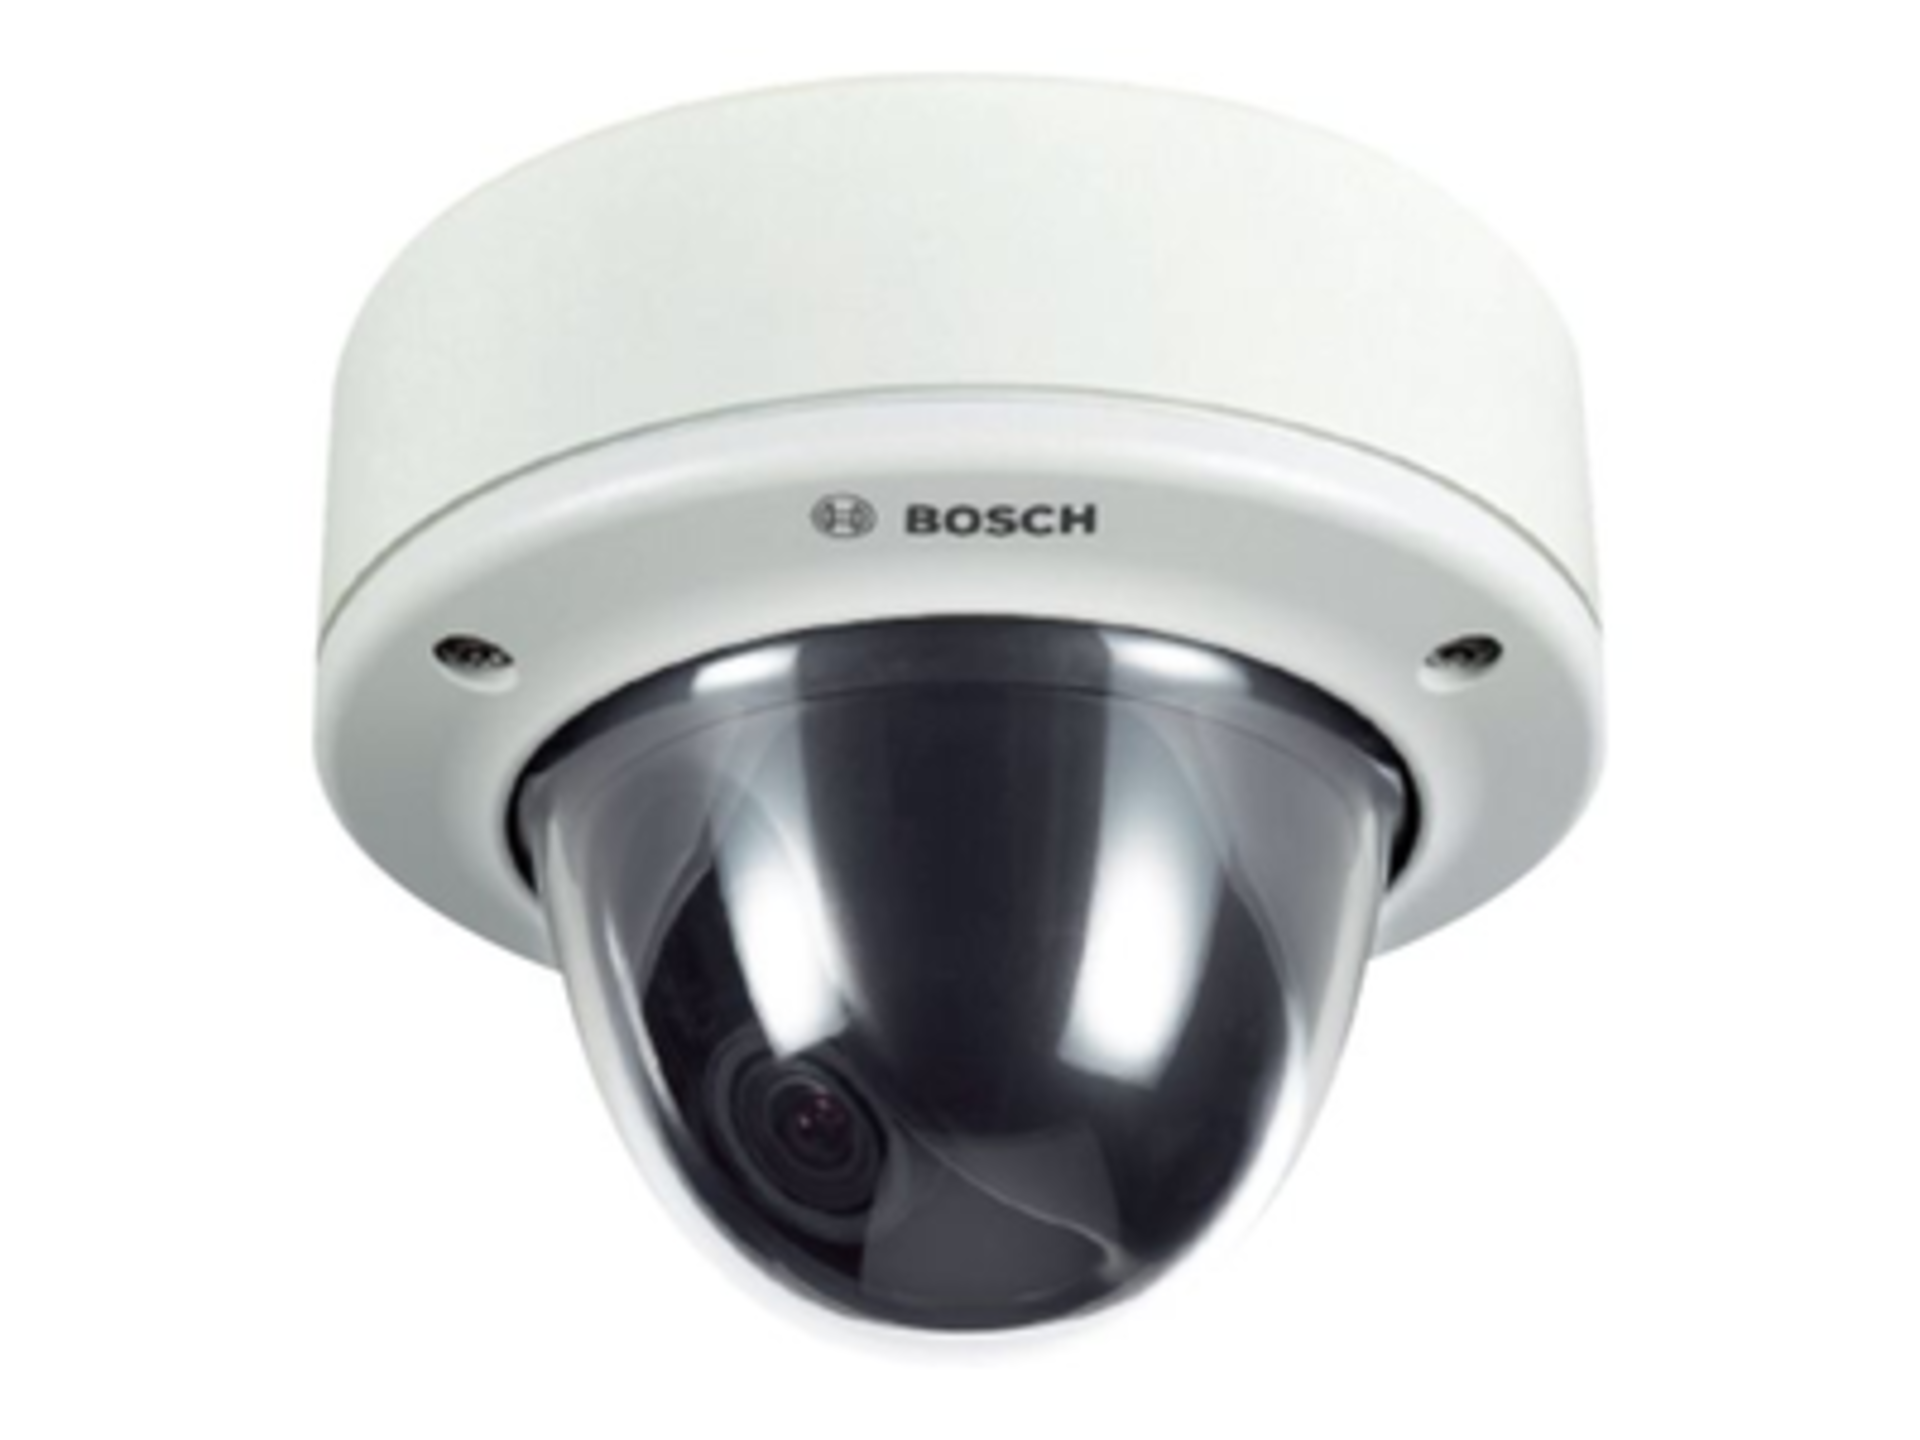 3 x Bosch VDC455V0410 Flexidome, Indoor/Outdoor Surface CCTV Surveillance Camera